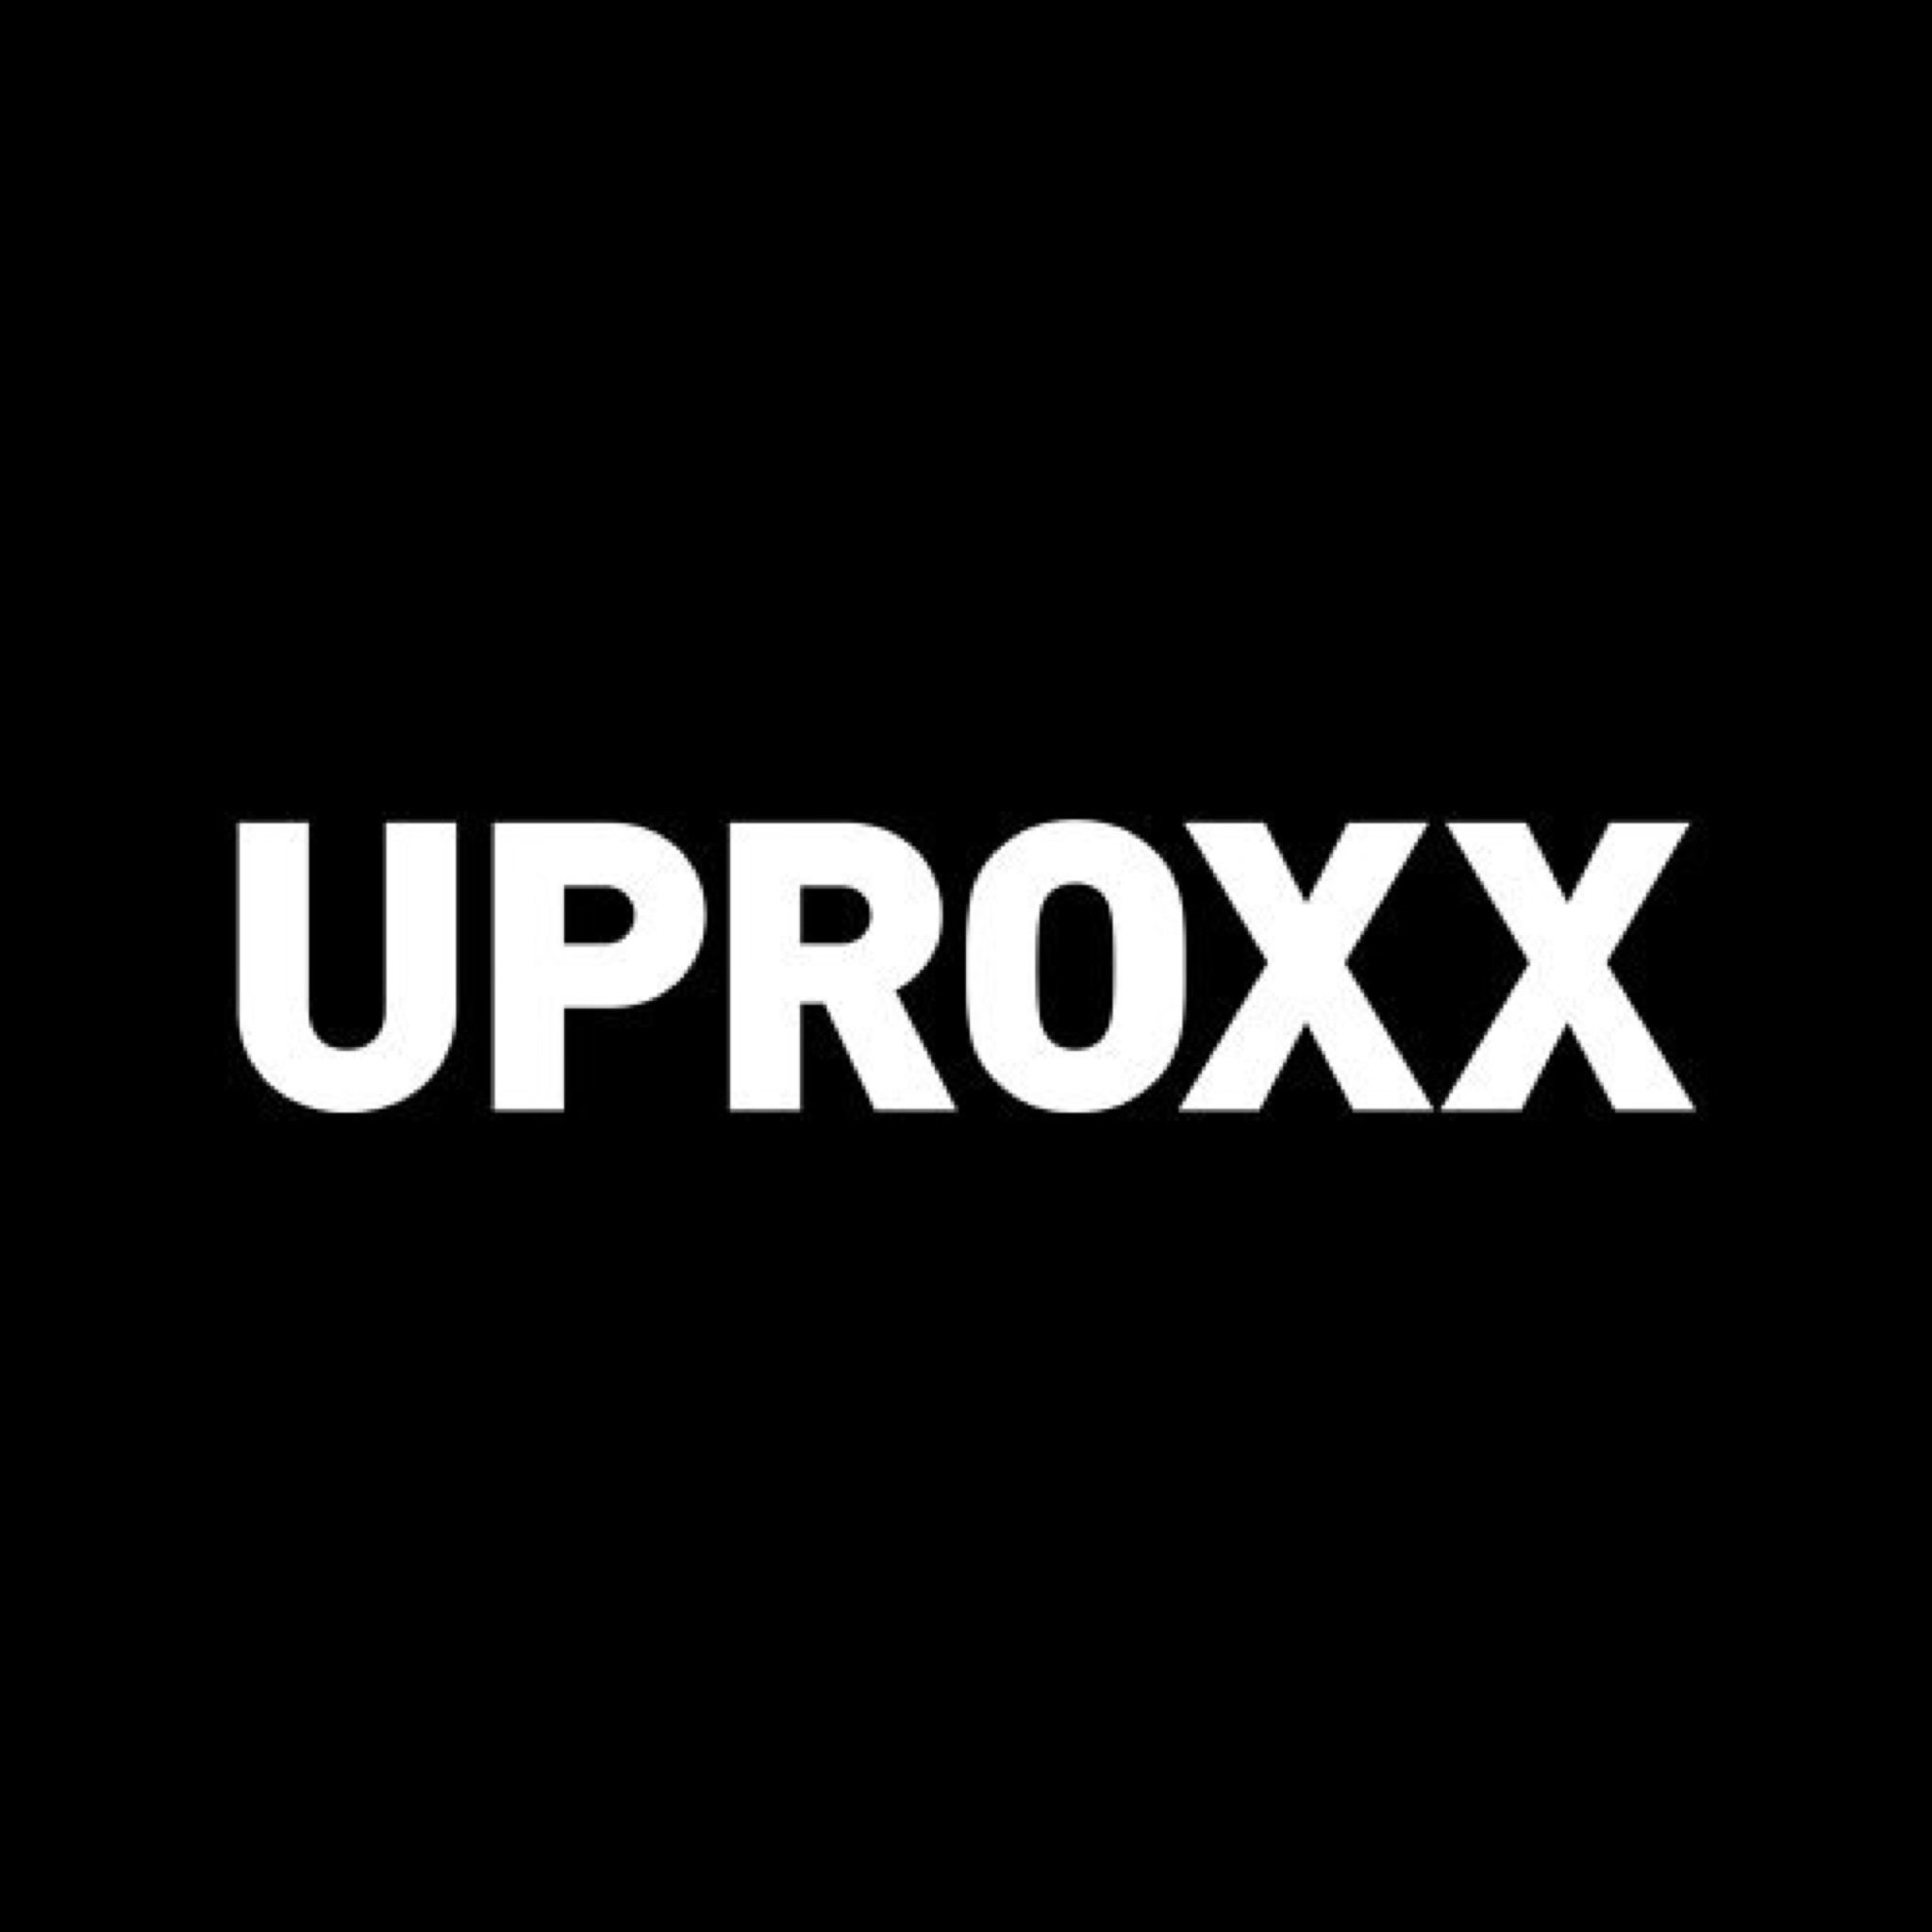 uproxx logo.jpg